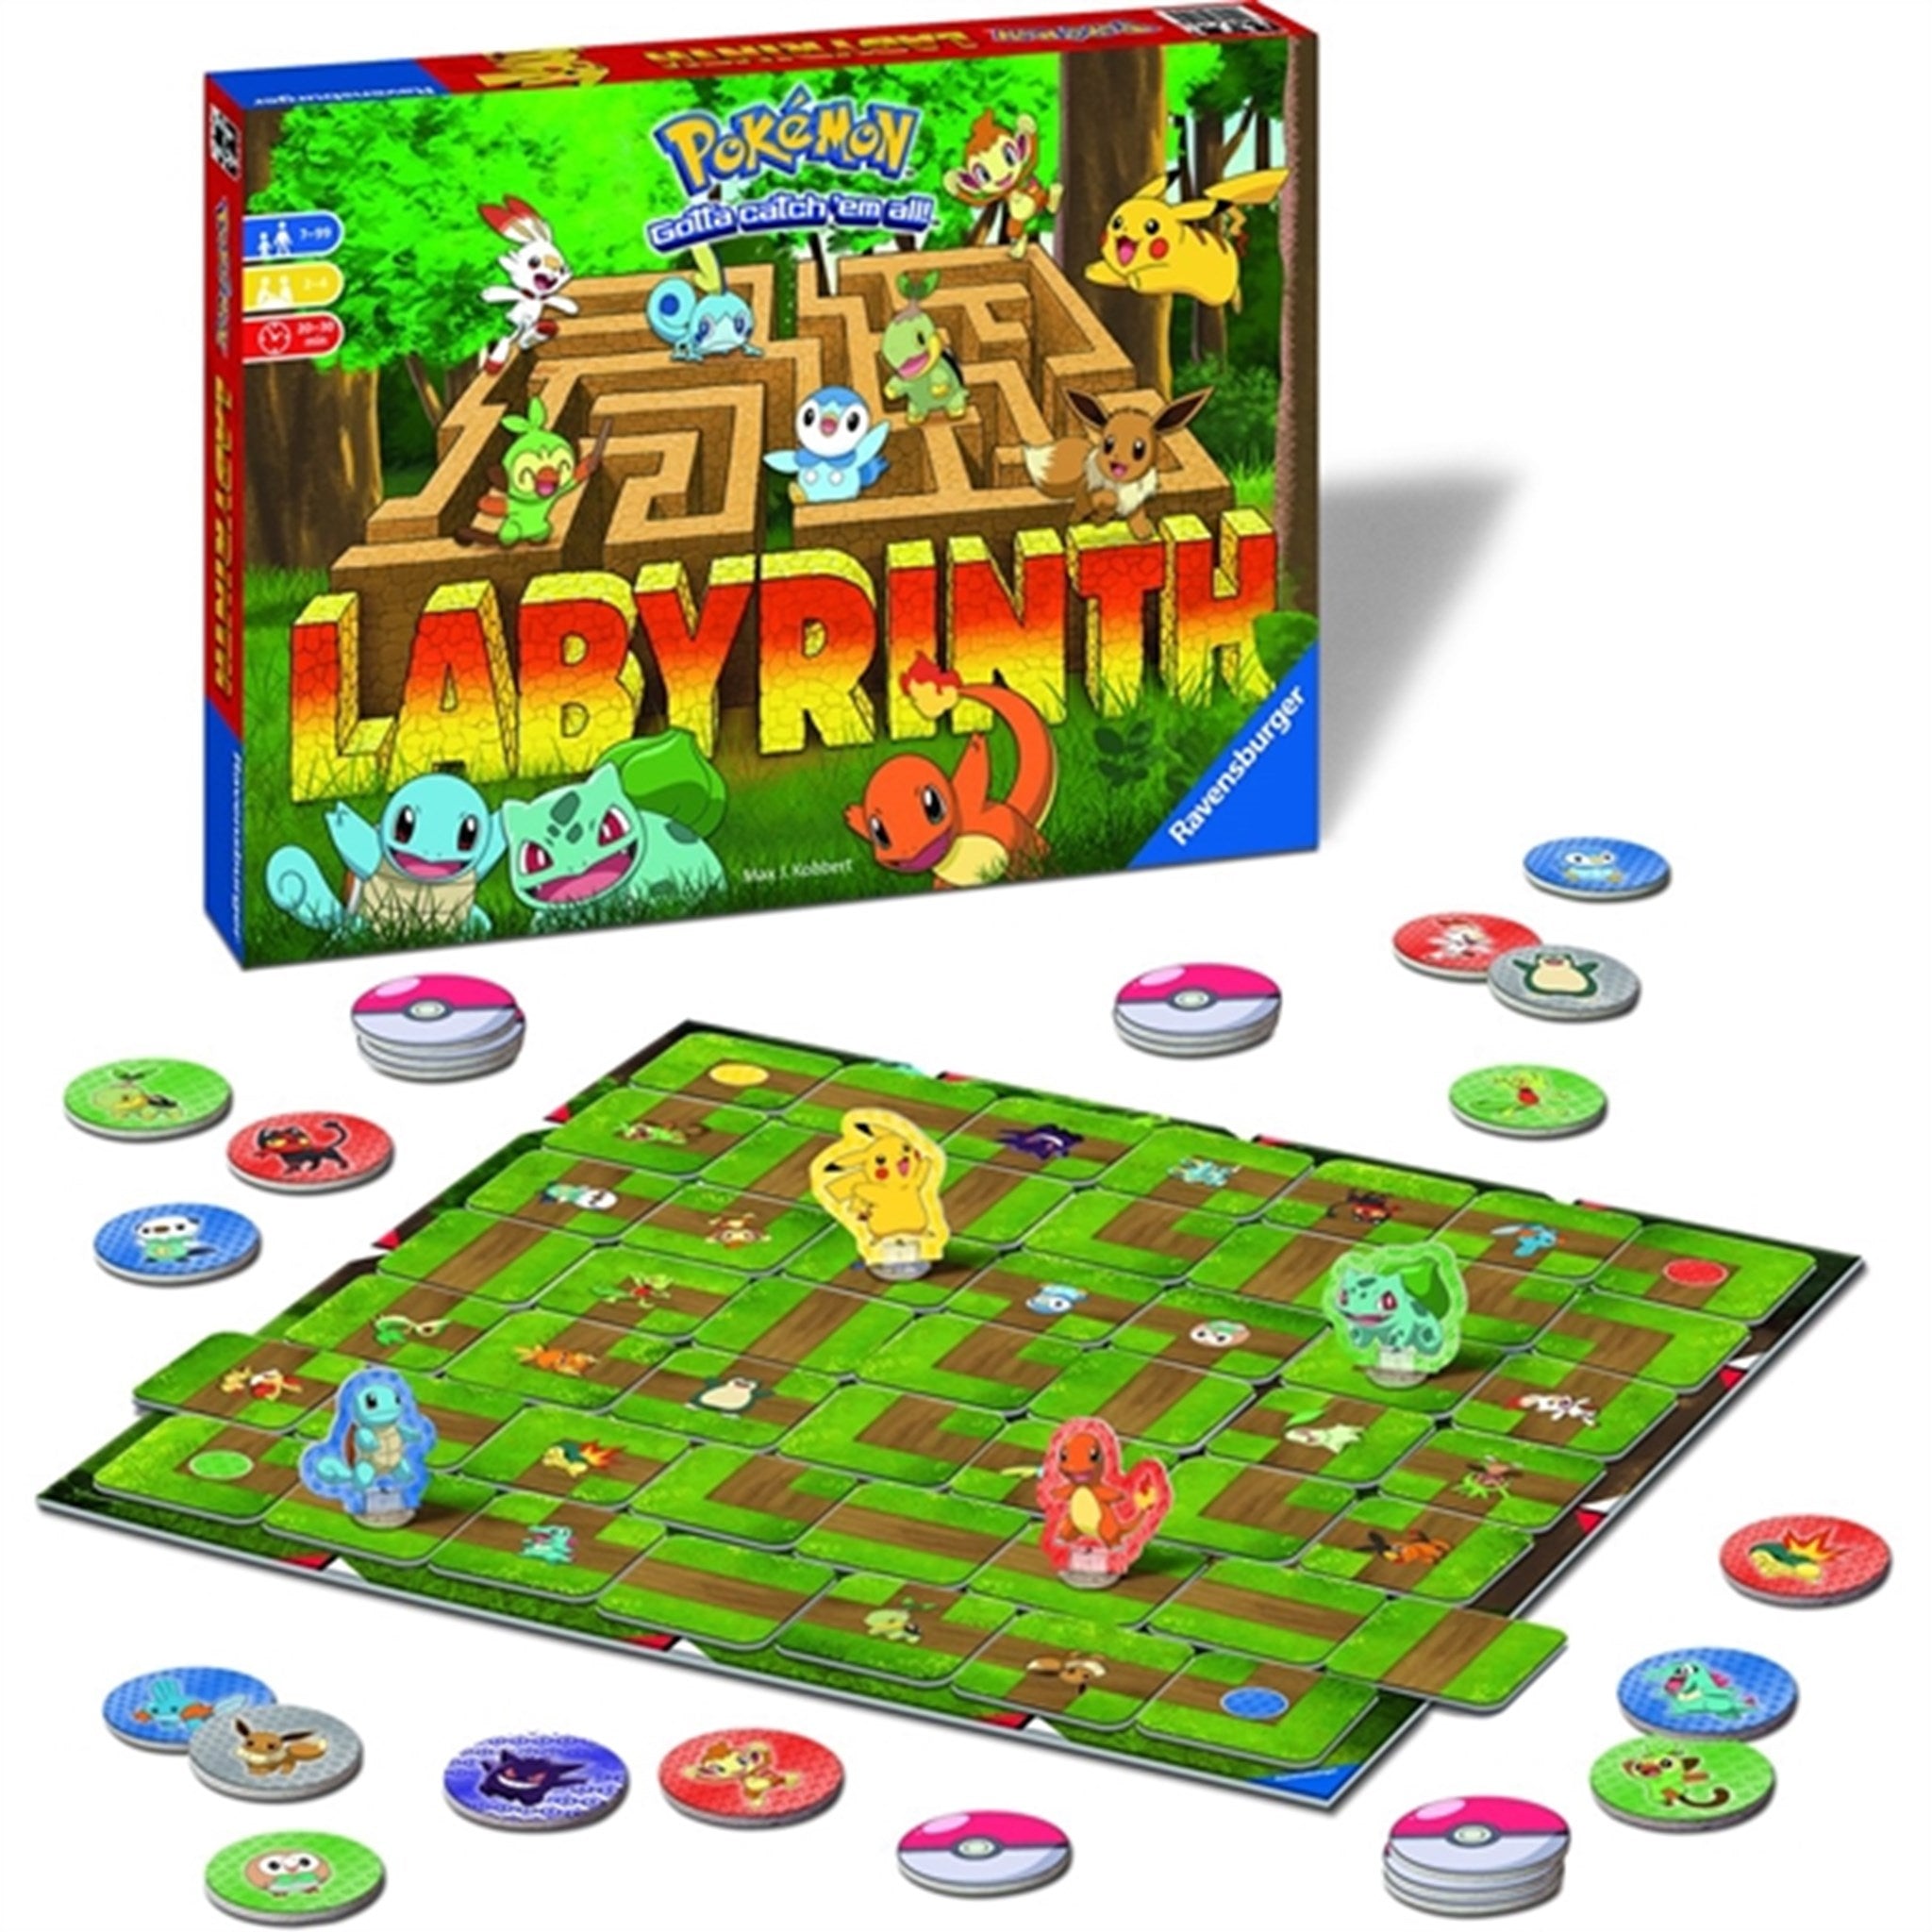 Ravensburger Pokémon Labyrinth Board Game 2